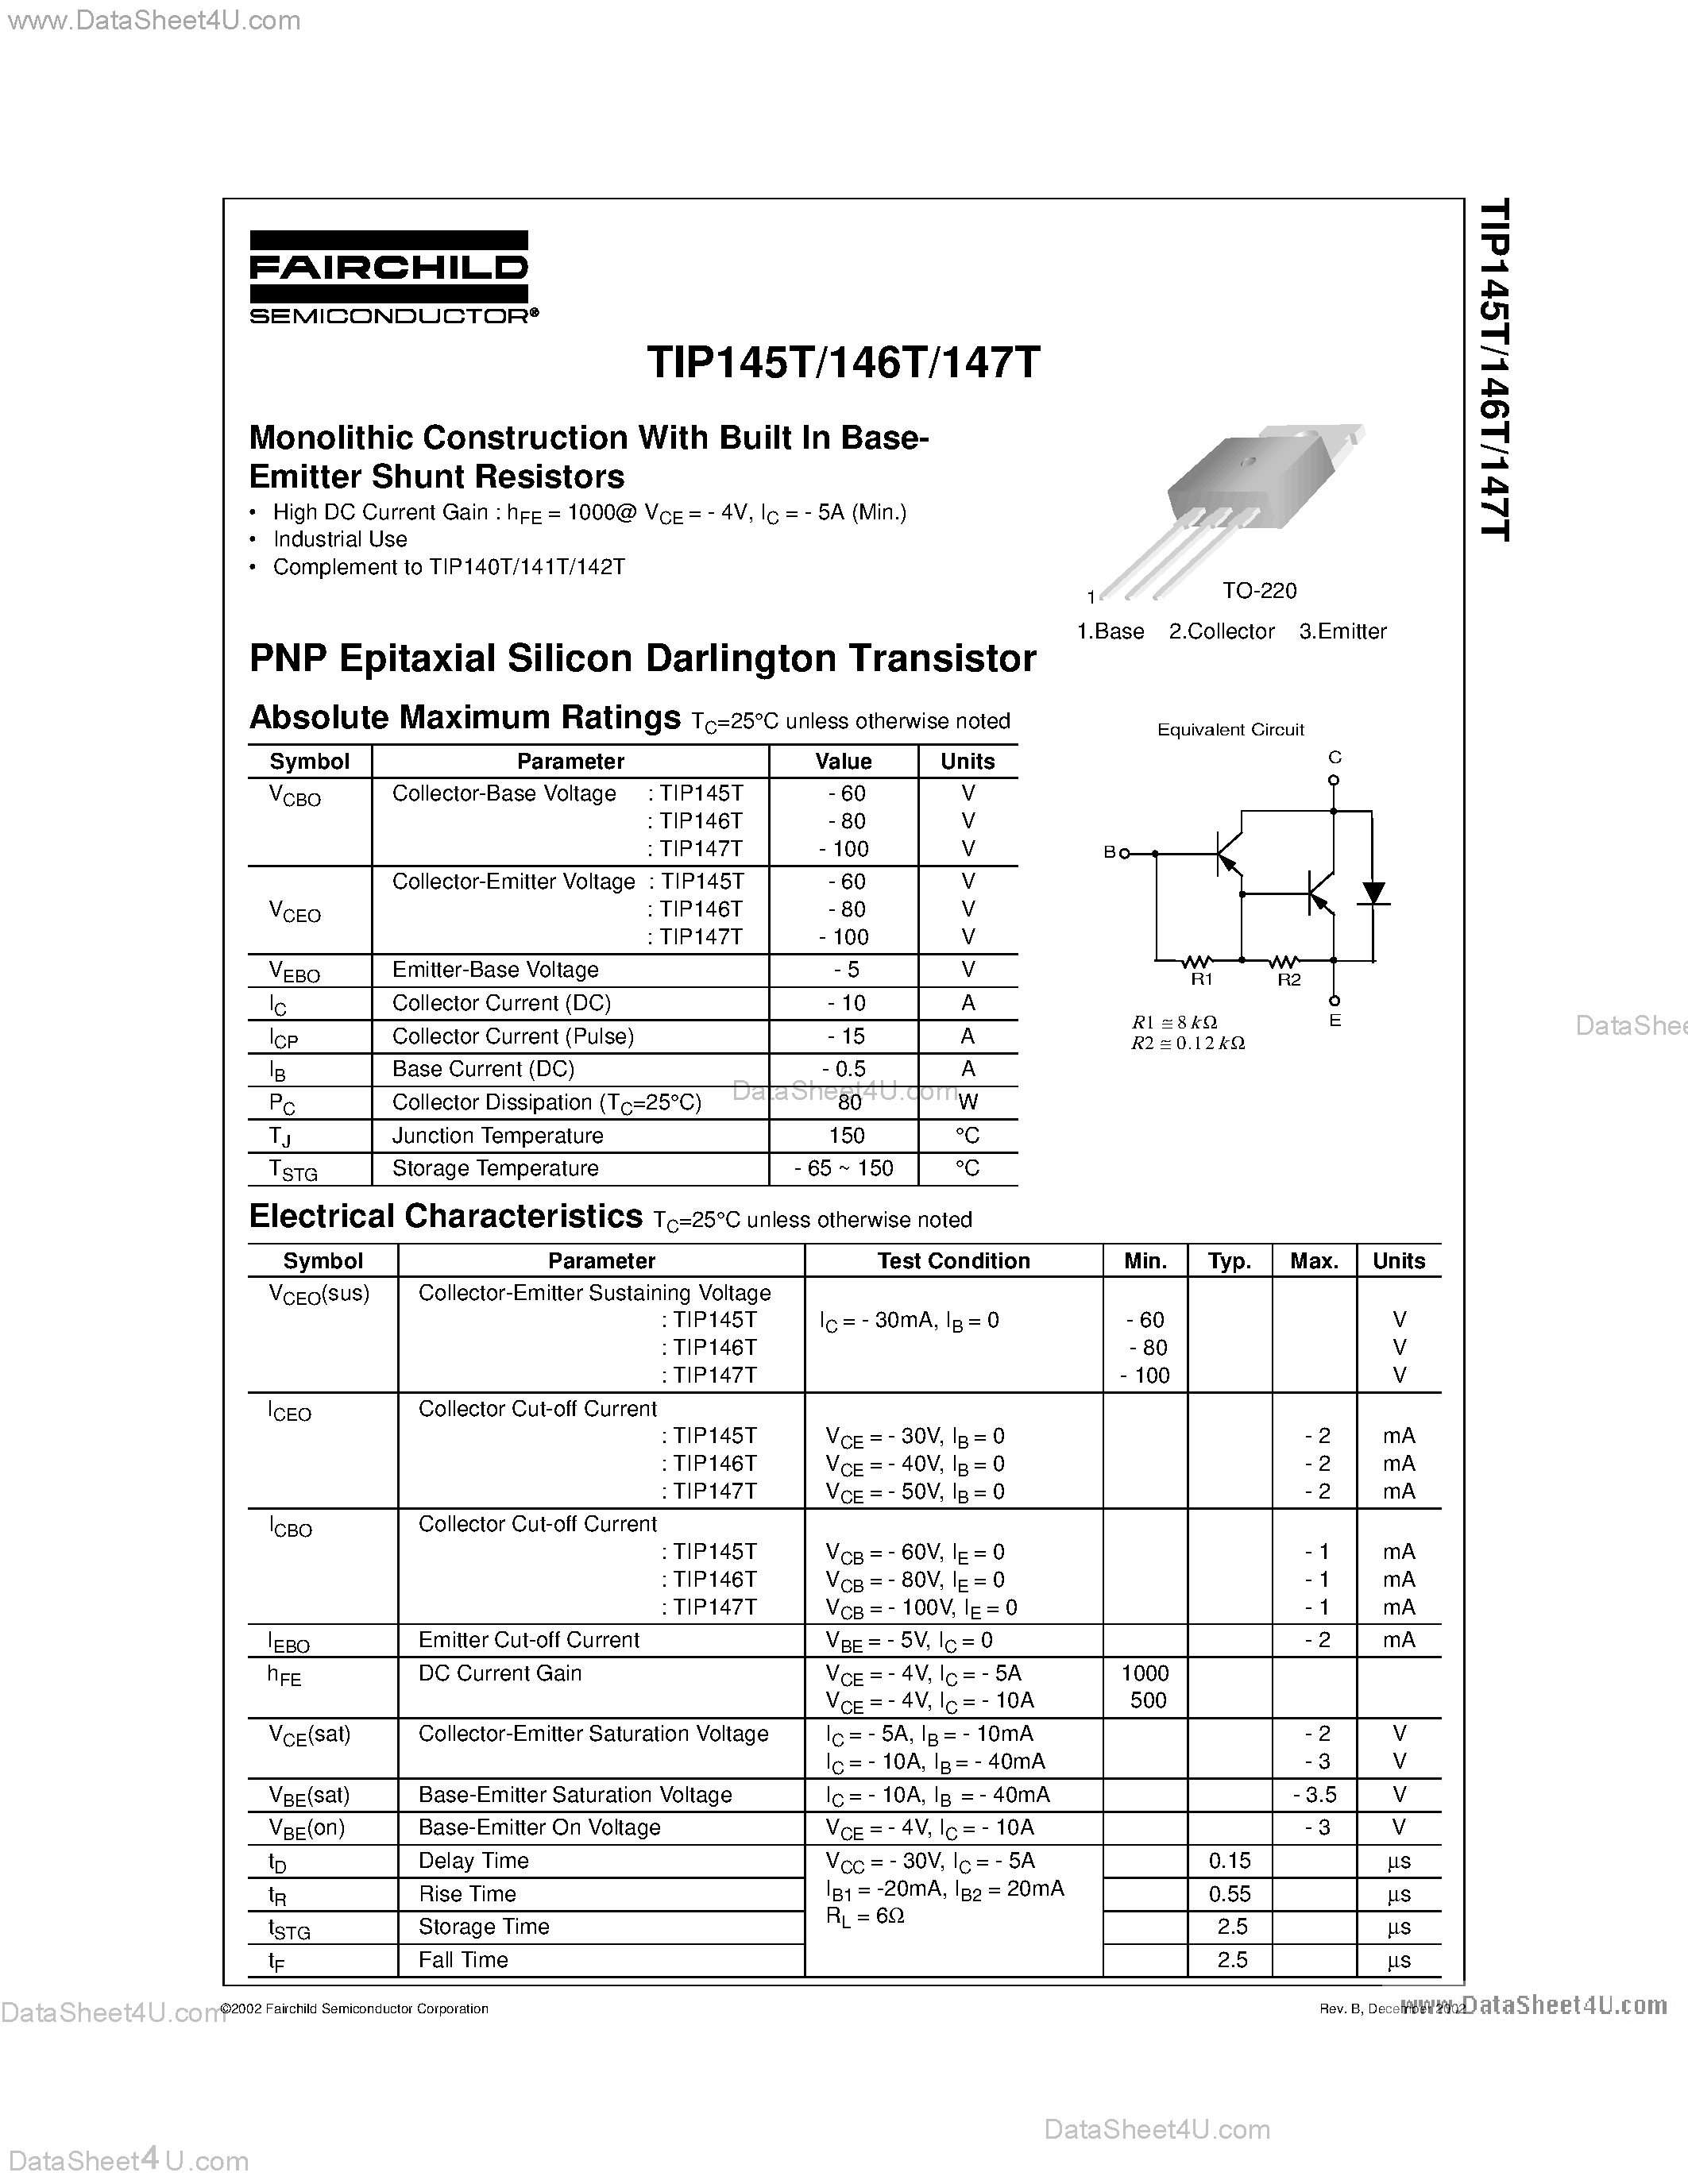 Даташит TIP145T - (TIP145T - TIP147T) Monolithic Construction With Built In Base-Emitter Shunt Resistors страница 1